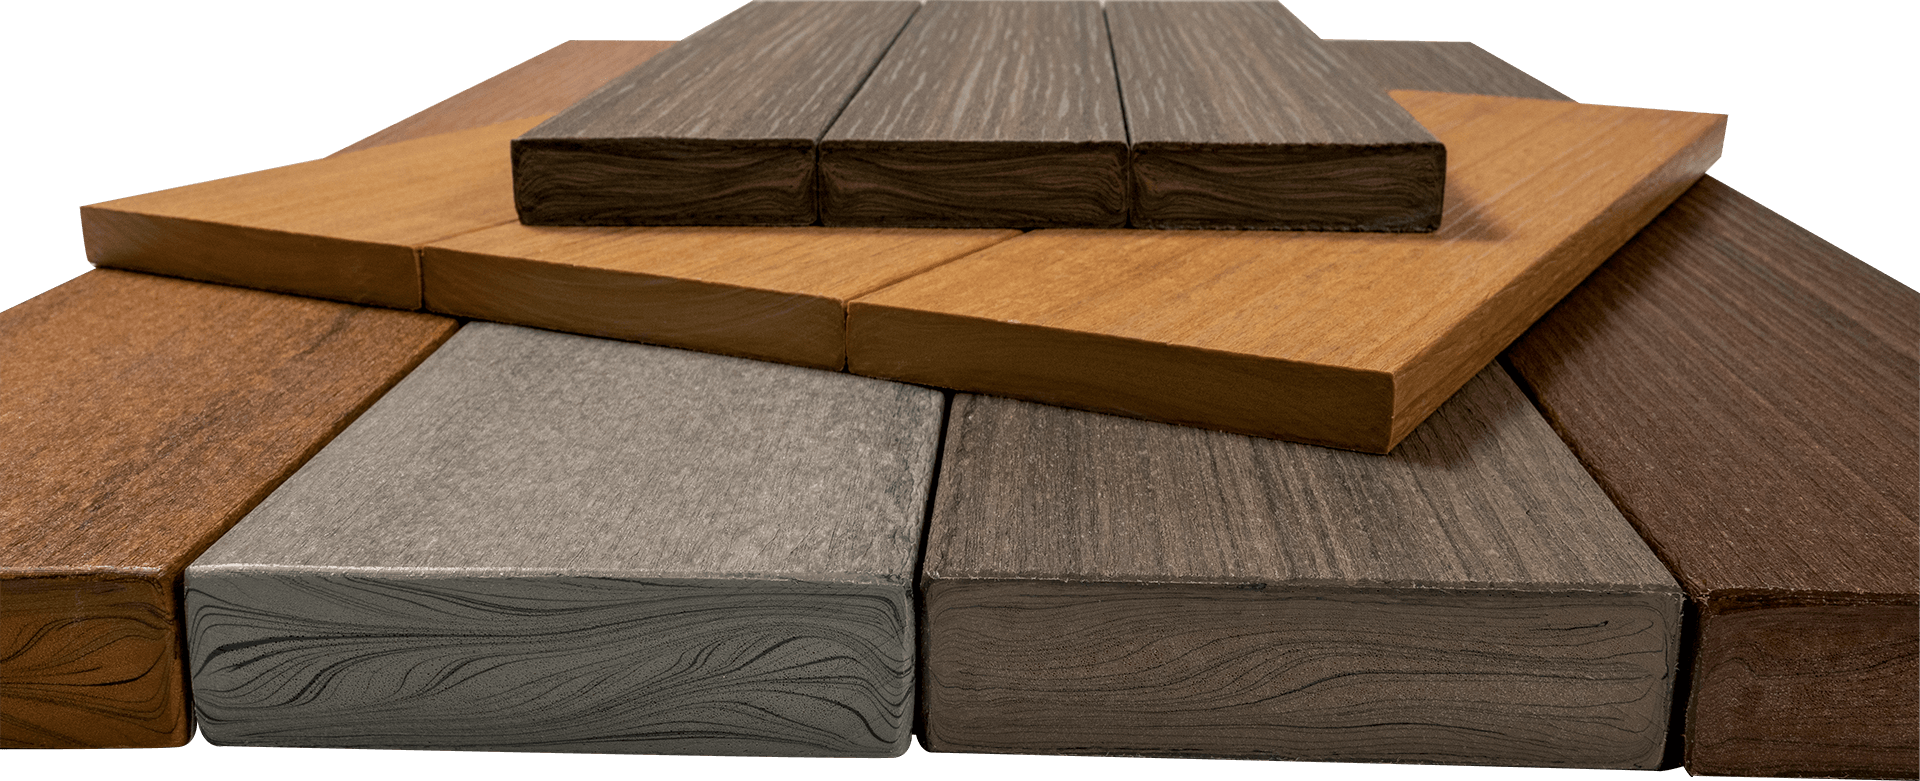 woodgrain poly lumber